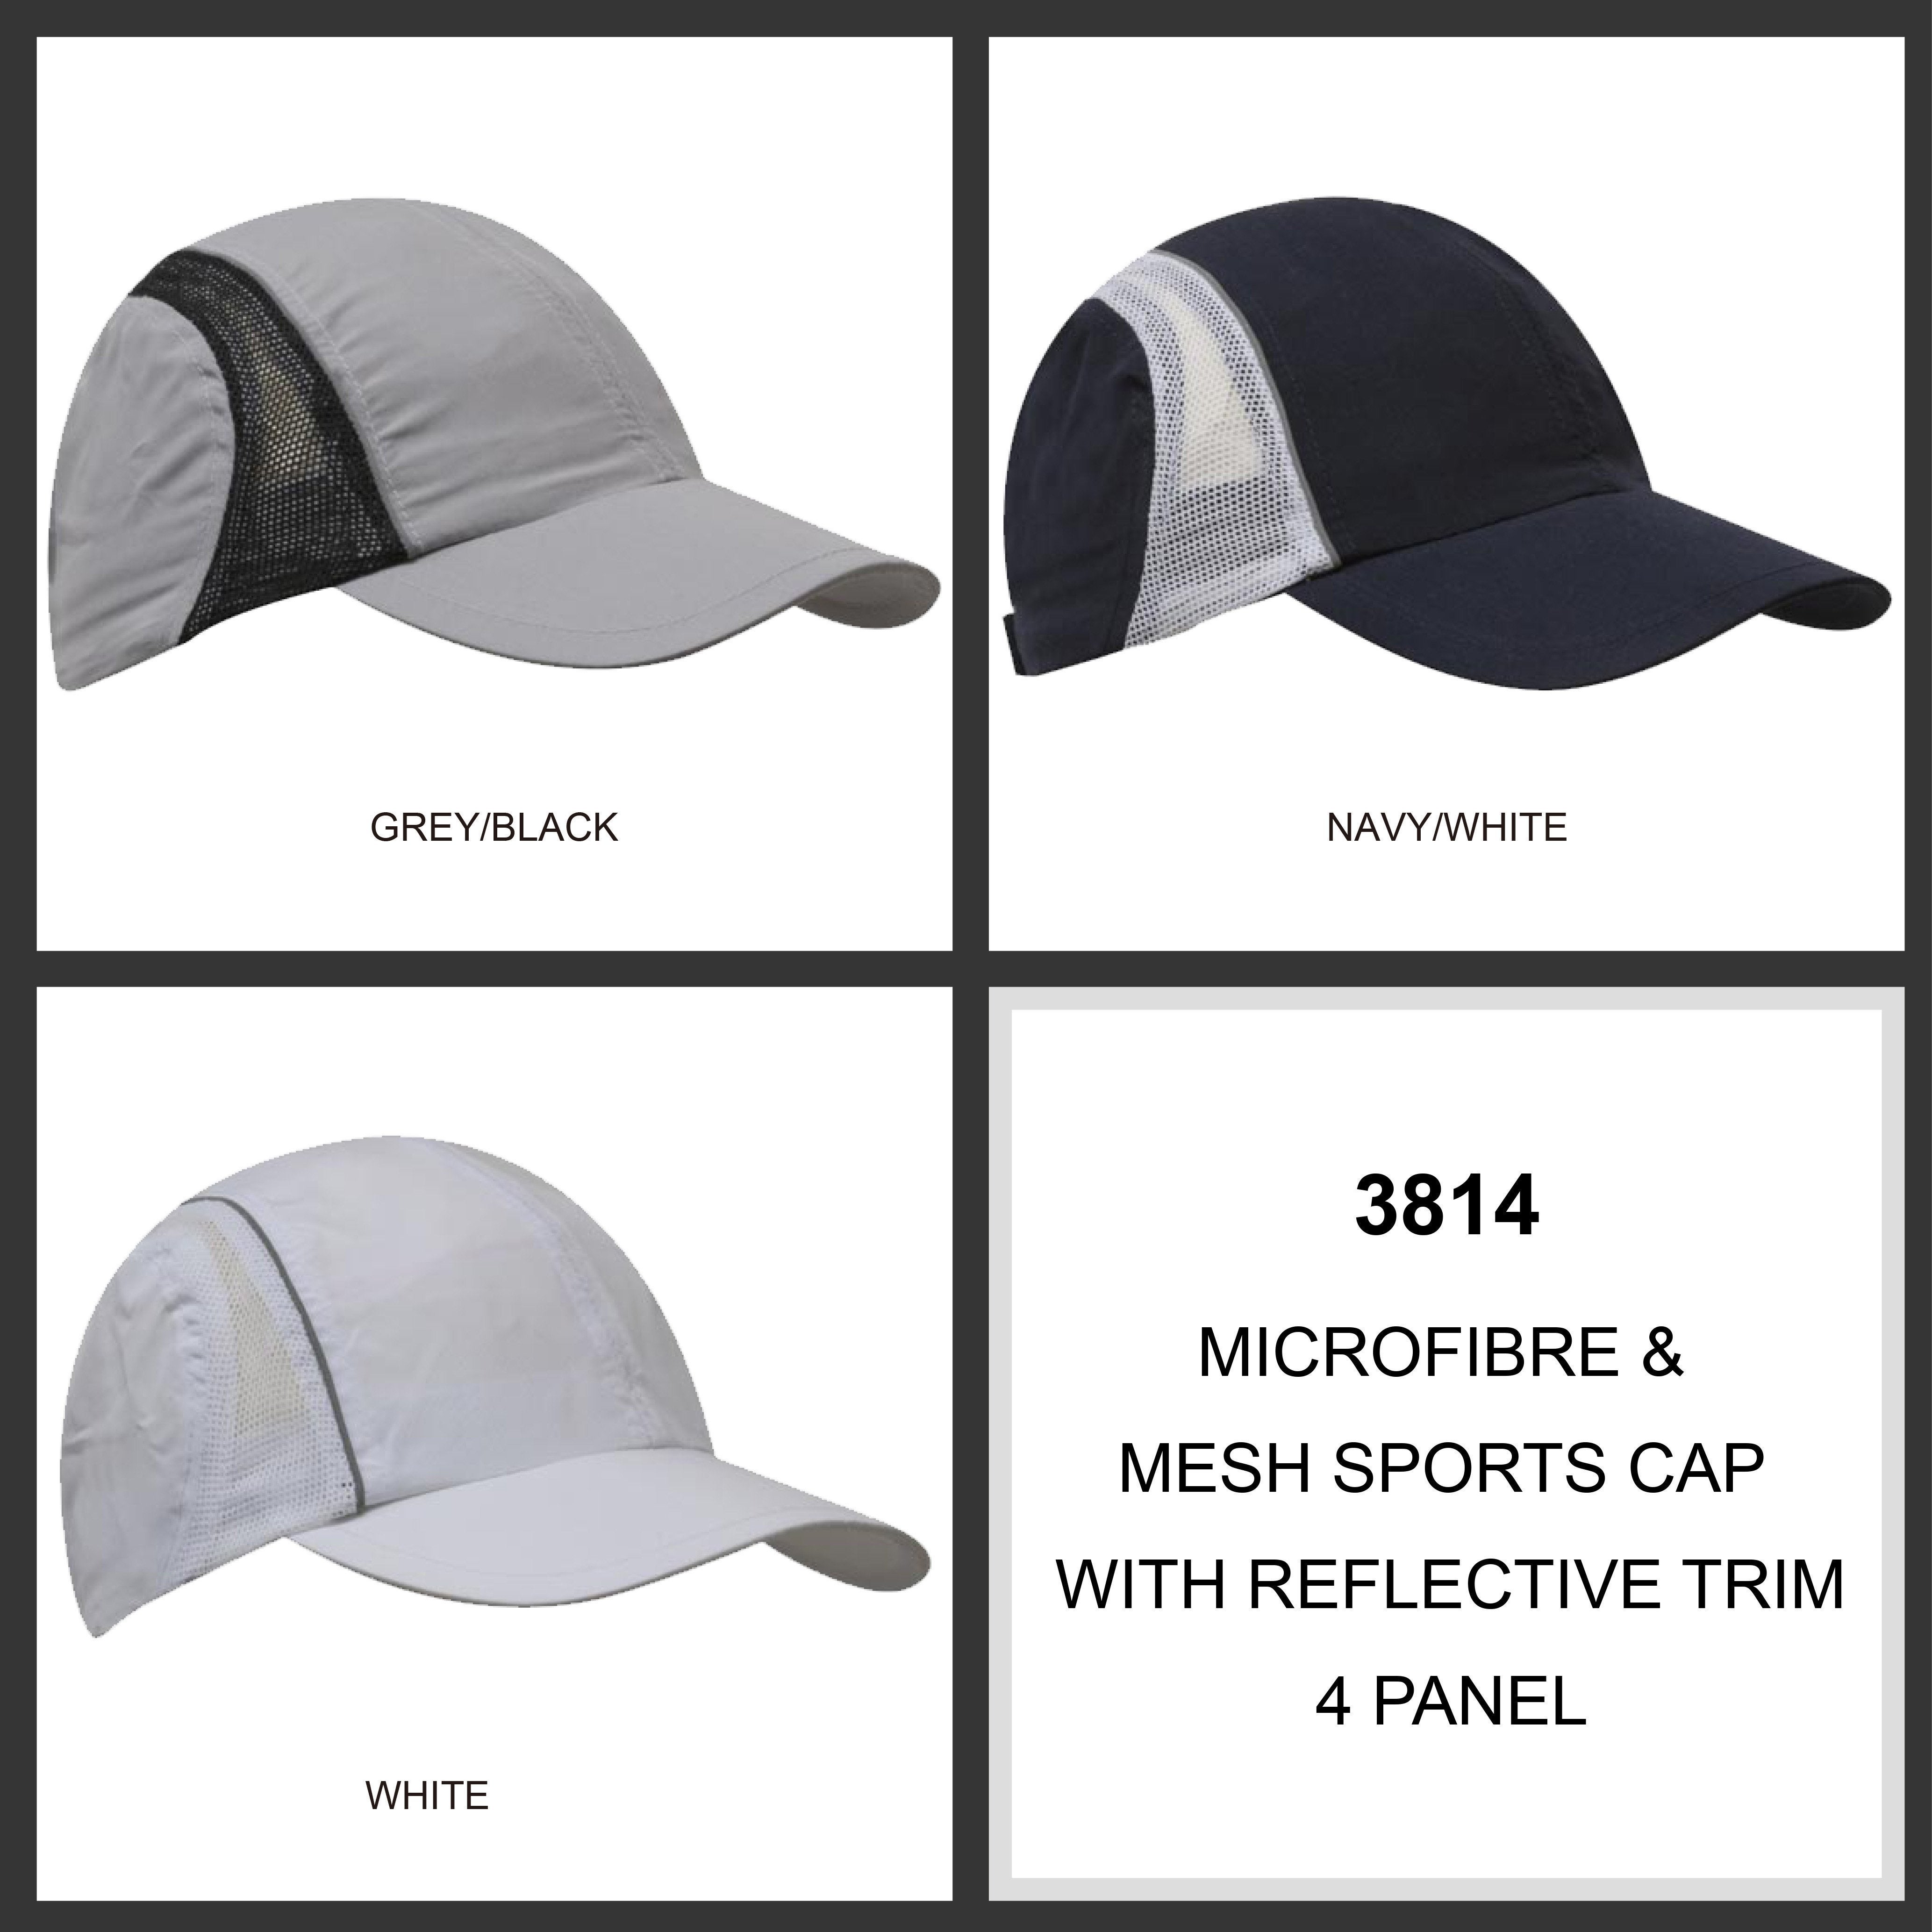 Micro Fibre & Mesh Sports Cap with Reflective Trim